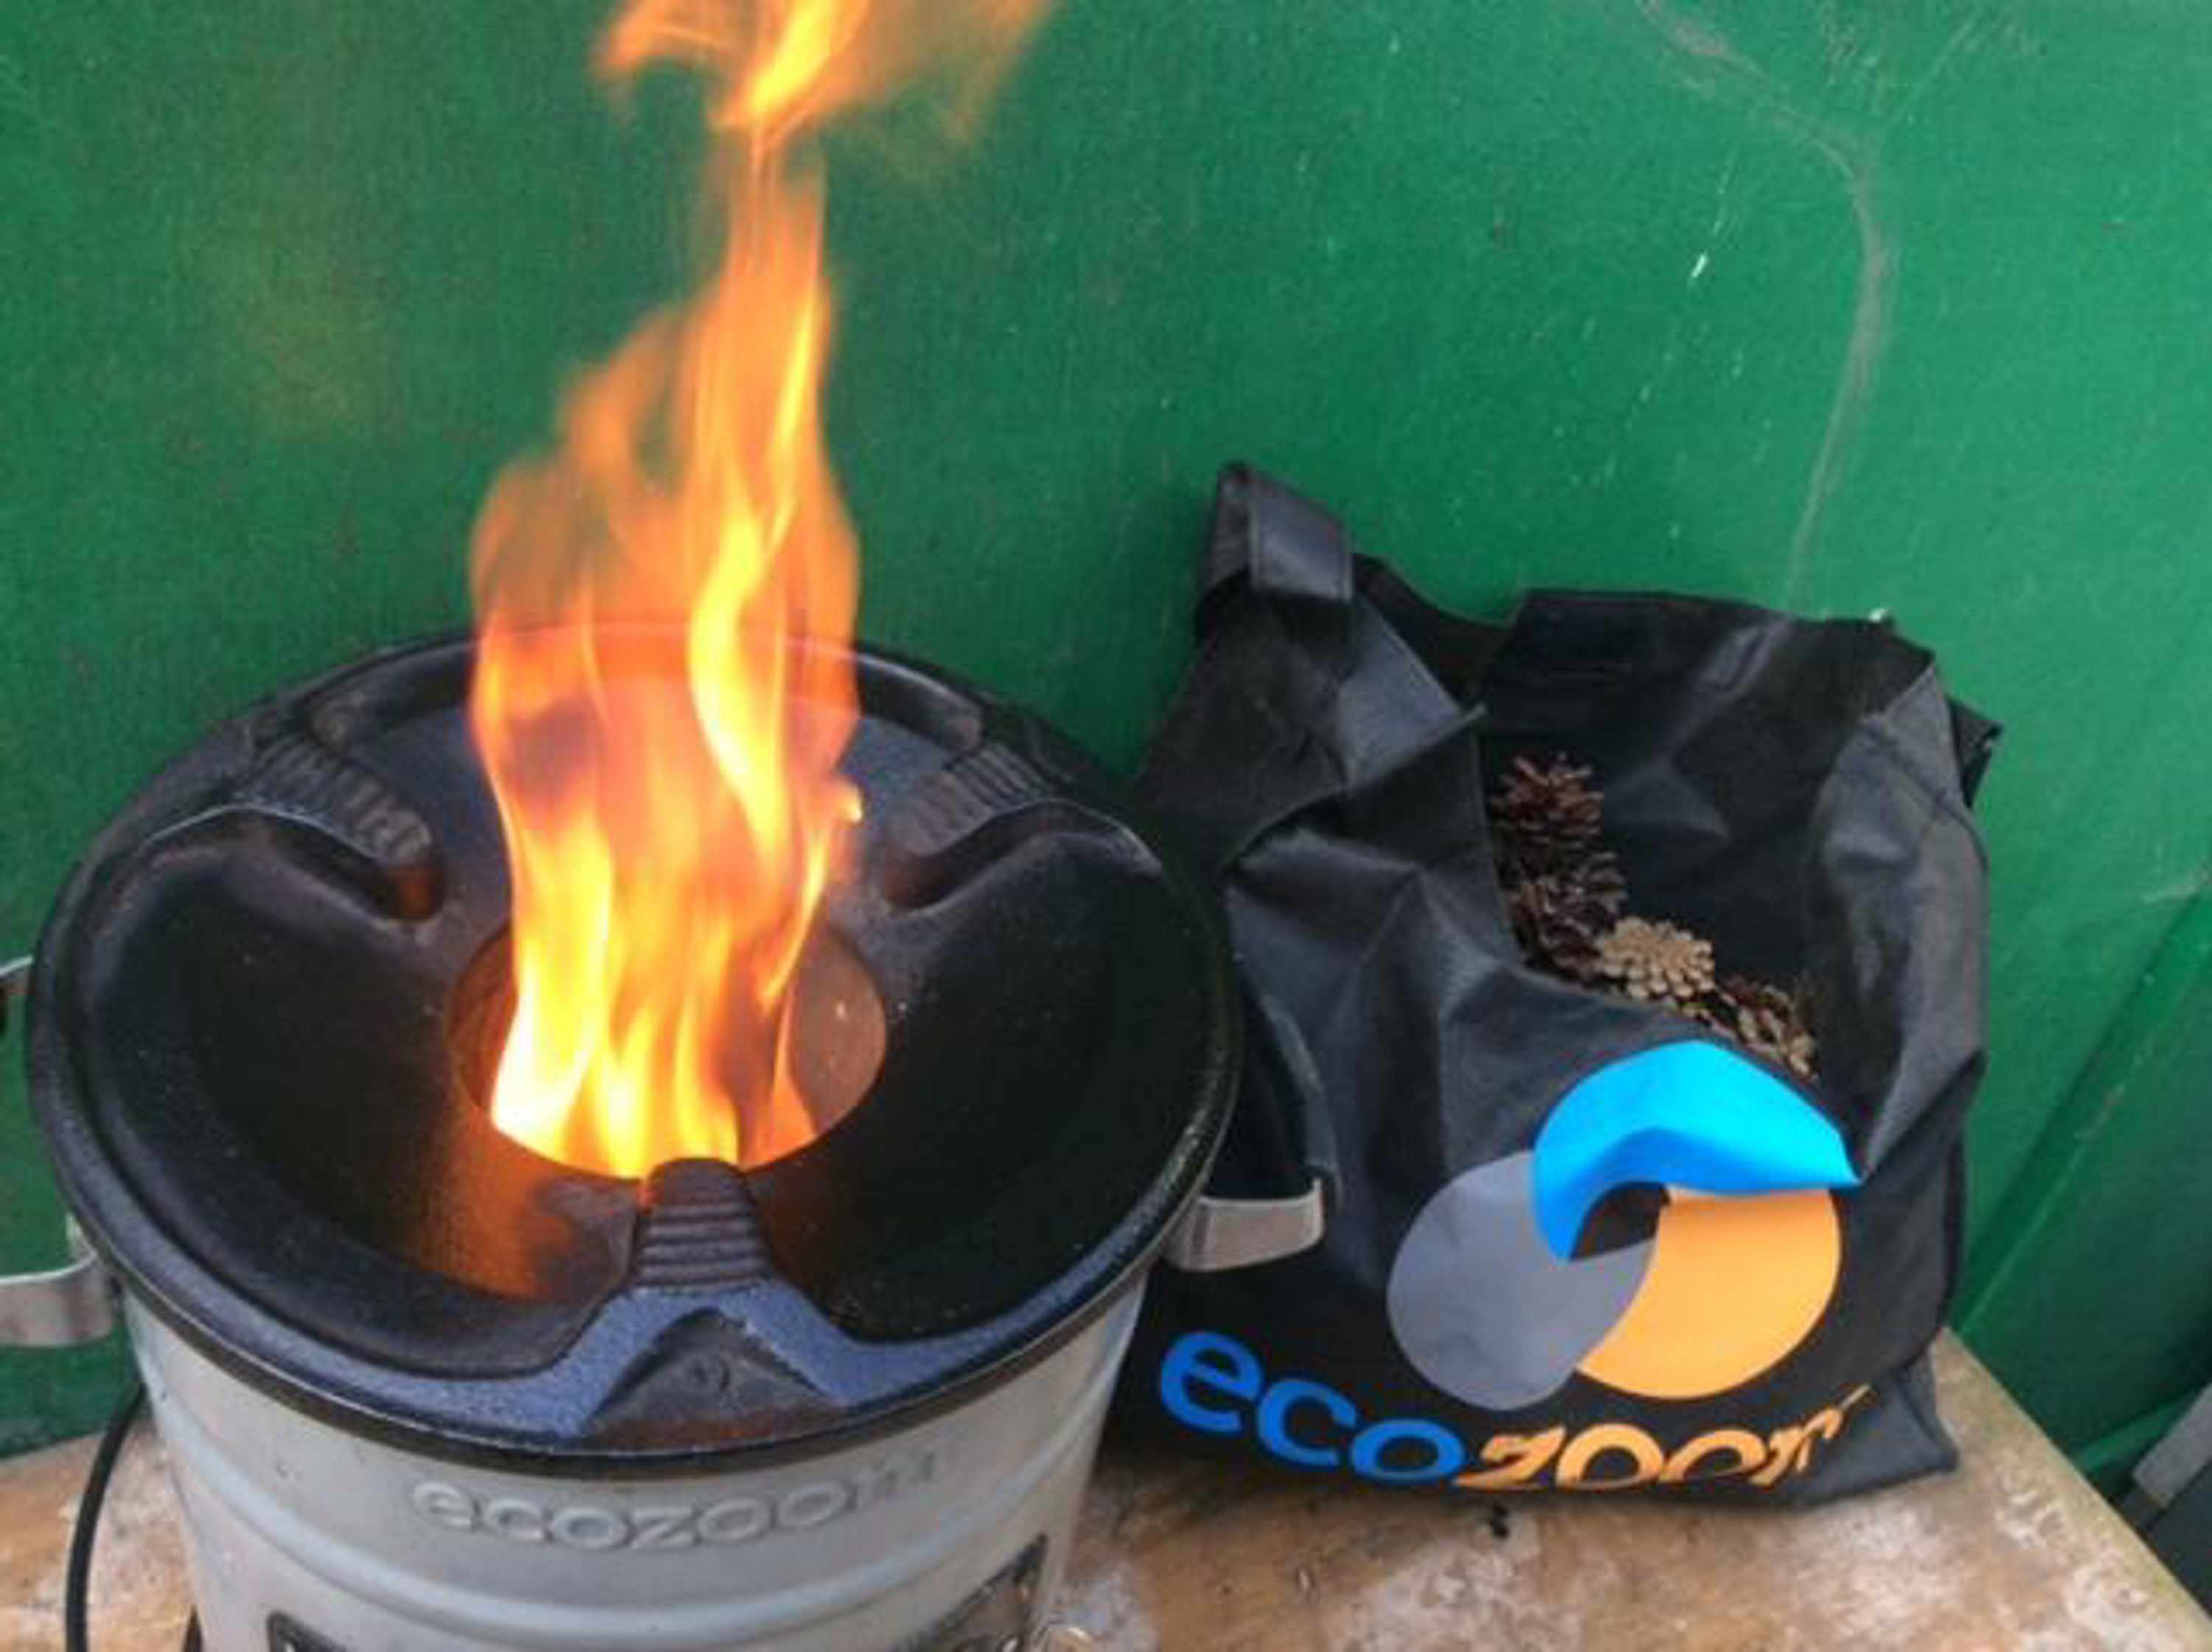 ecozoom rocket stove 2